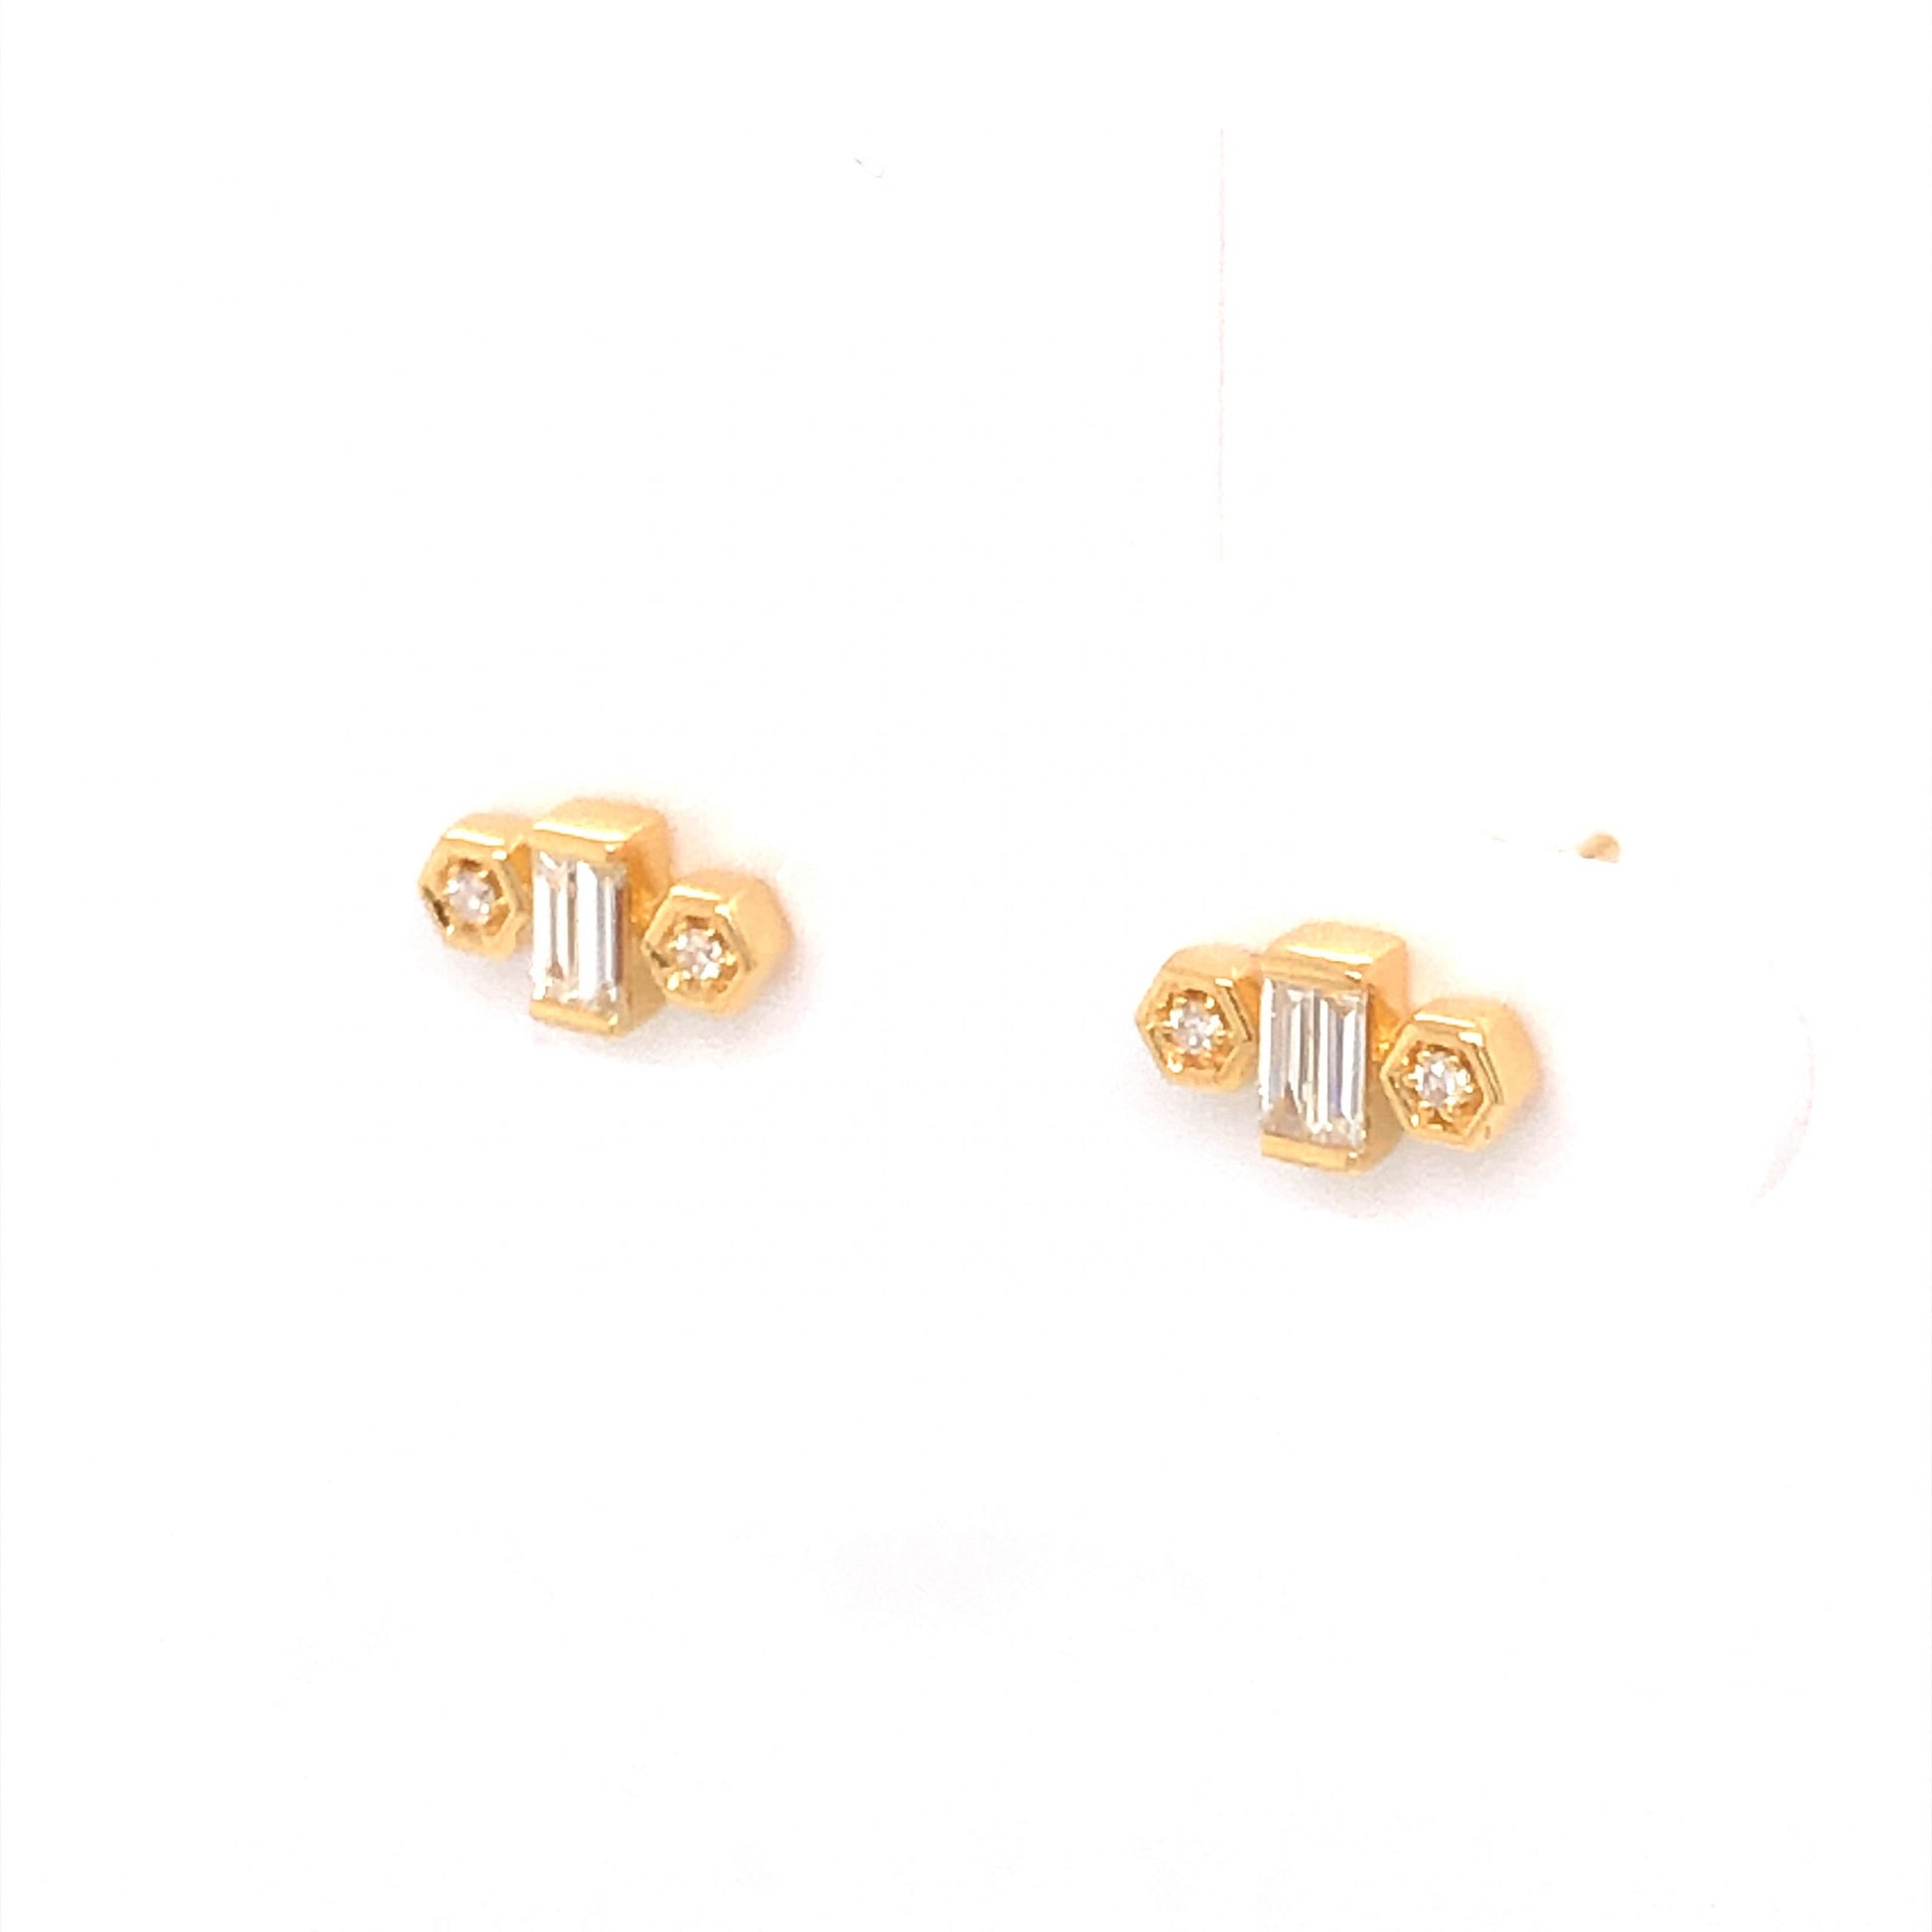 .17 Baguette Diamond Earrings in 18k Yellow GoldComposition: 18 Karat Yellow GoldTotal Diamond Weight: .17 ctTotal Gram Weight: 1.7 gInscription: 750